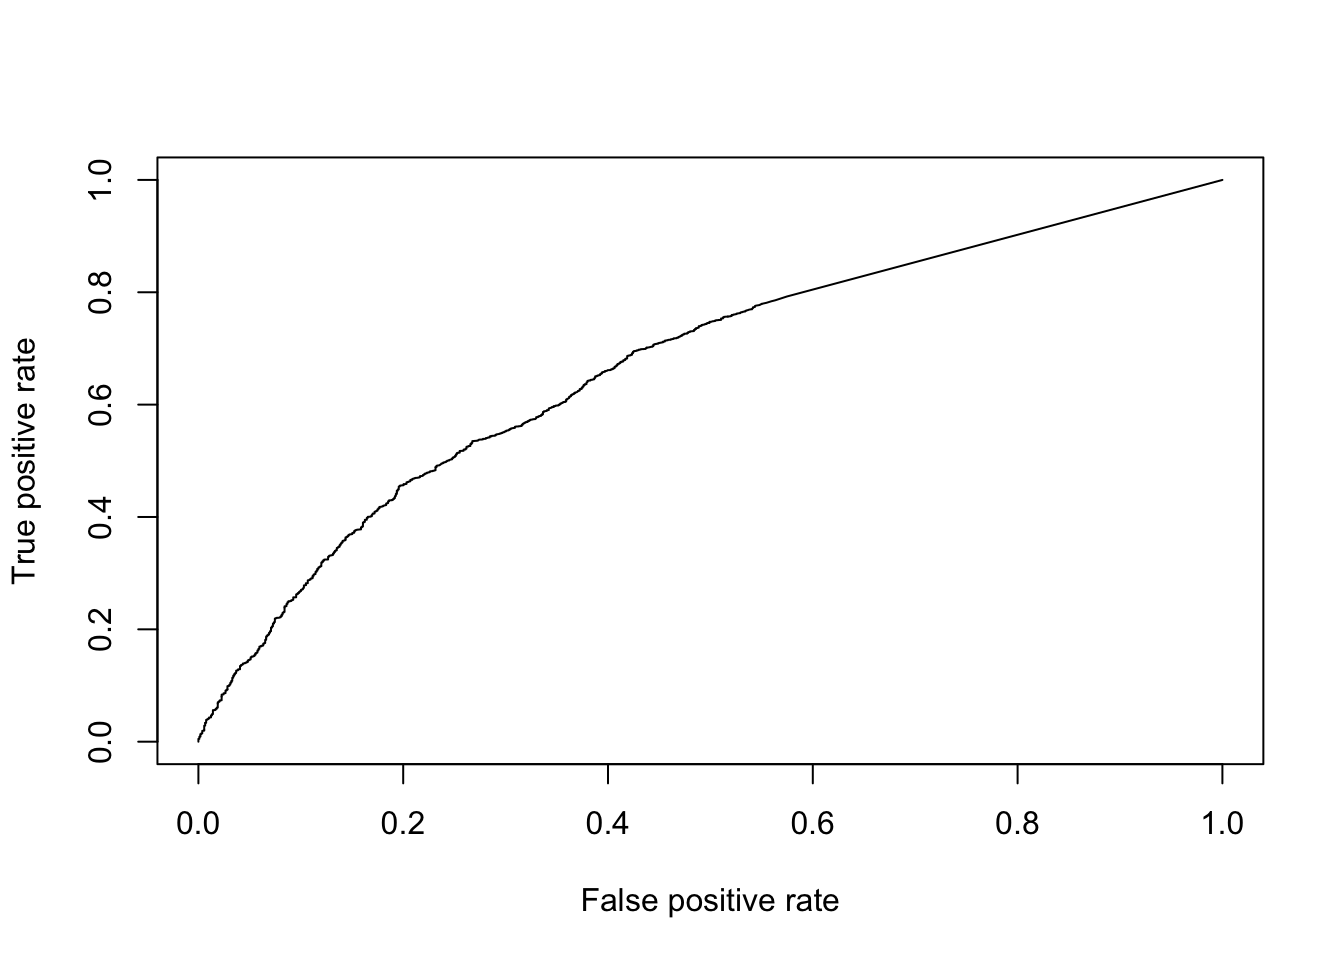 ROC curve for KS-test.